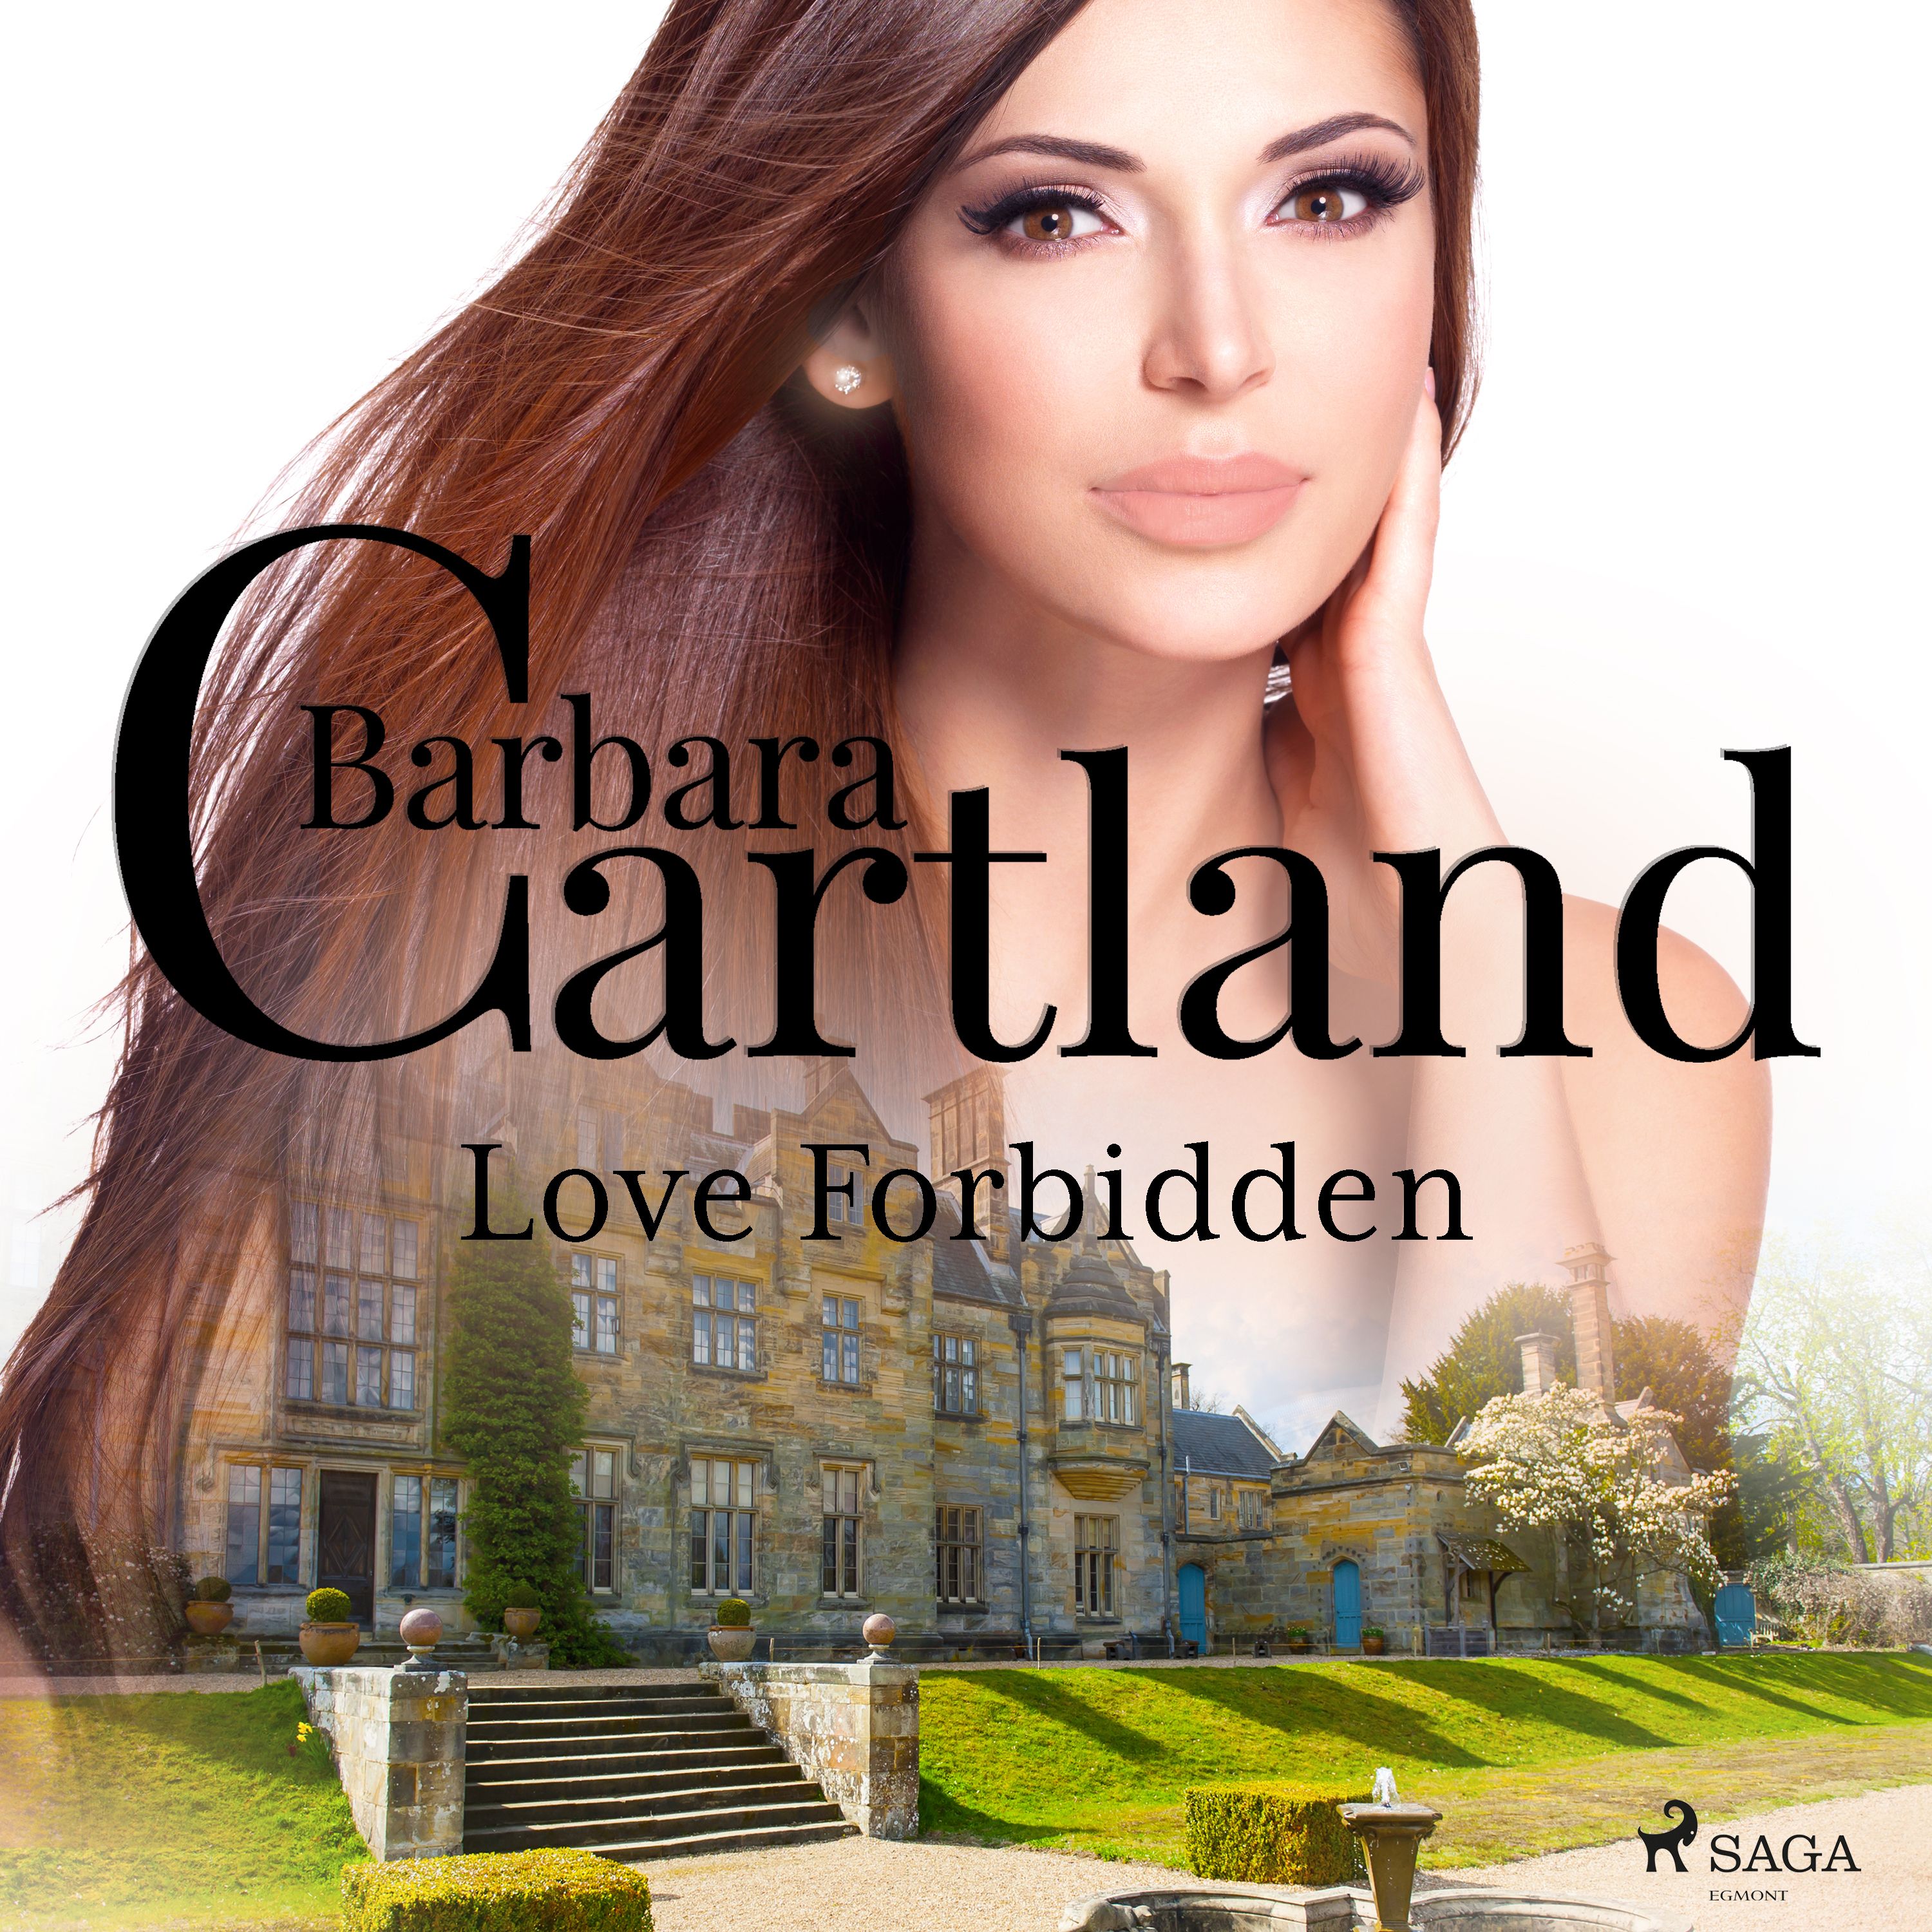 Love Forbidden, lydbog af Barbara Cartland